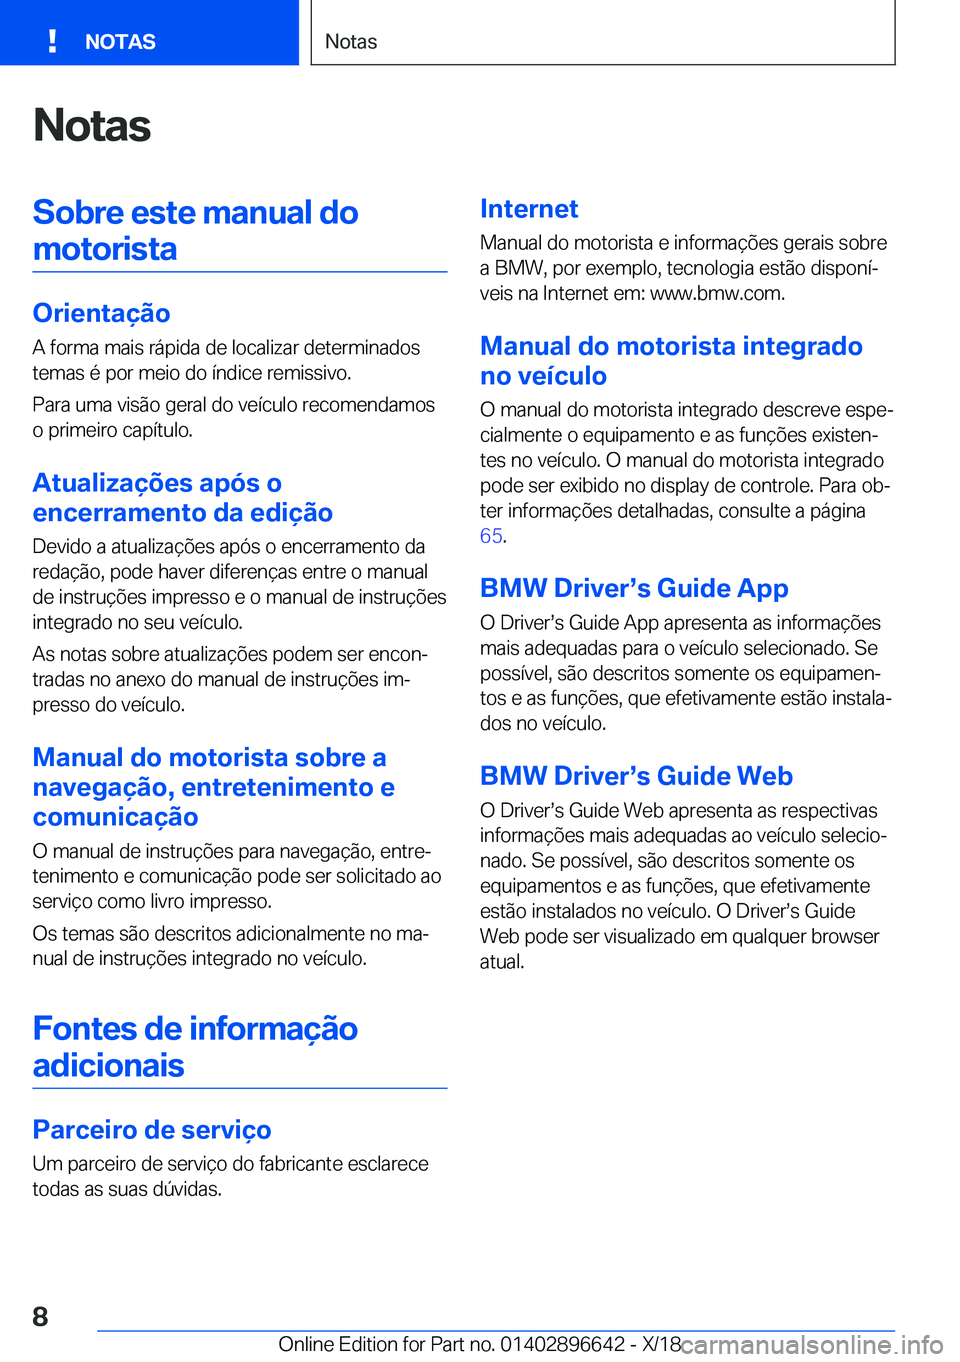 BMW M2 2019  Manual do condutor (in Portuguese) �N�o�t�a�s�S�o�b�r�e��e�s�t�e��m�a�n�u�a�l��d�o�m�o�t�o�r�i�s�t�a
�O�r�i�e�n�t�a�